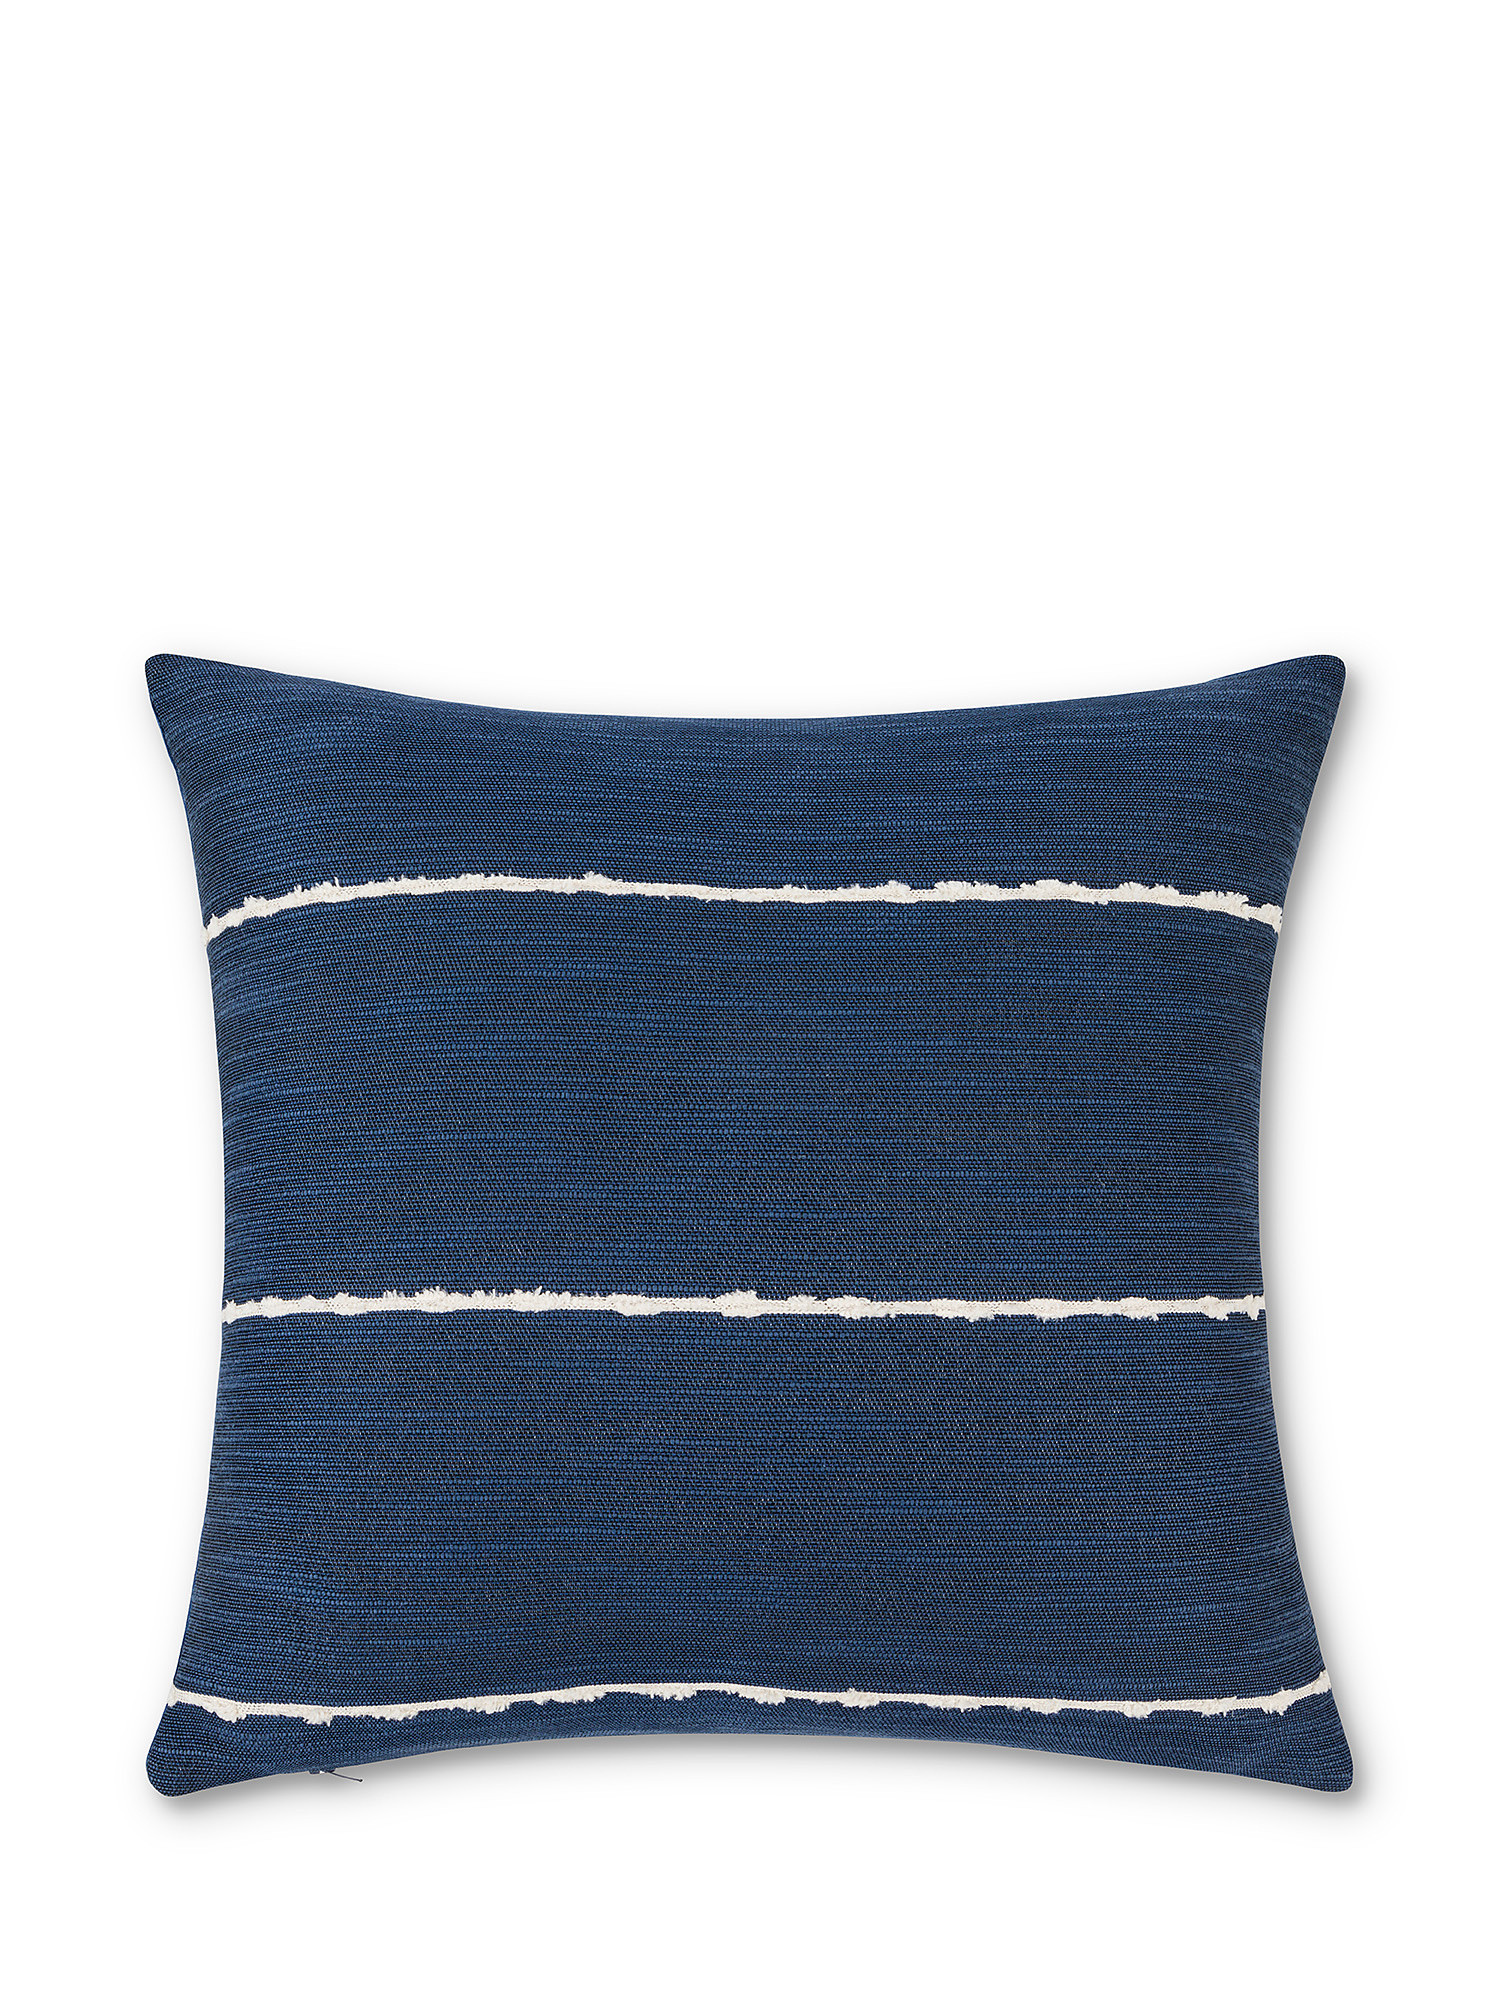 Cuscino tessuto motivo a righe 45x45cm, Blu, large image number 0